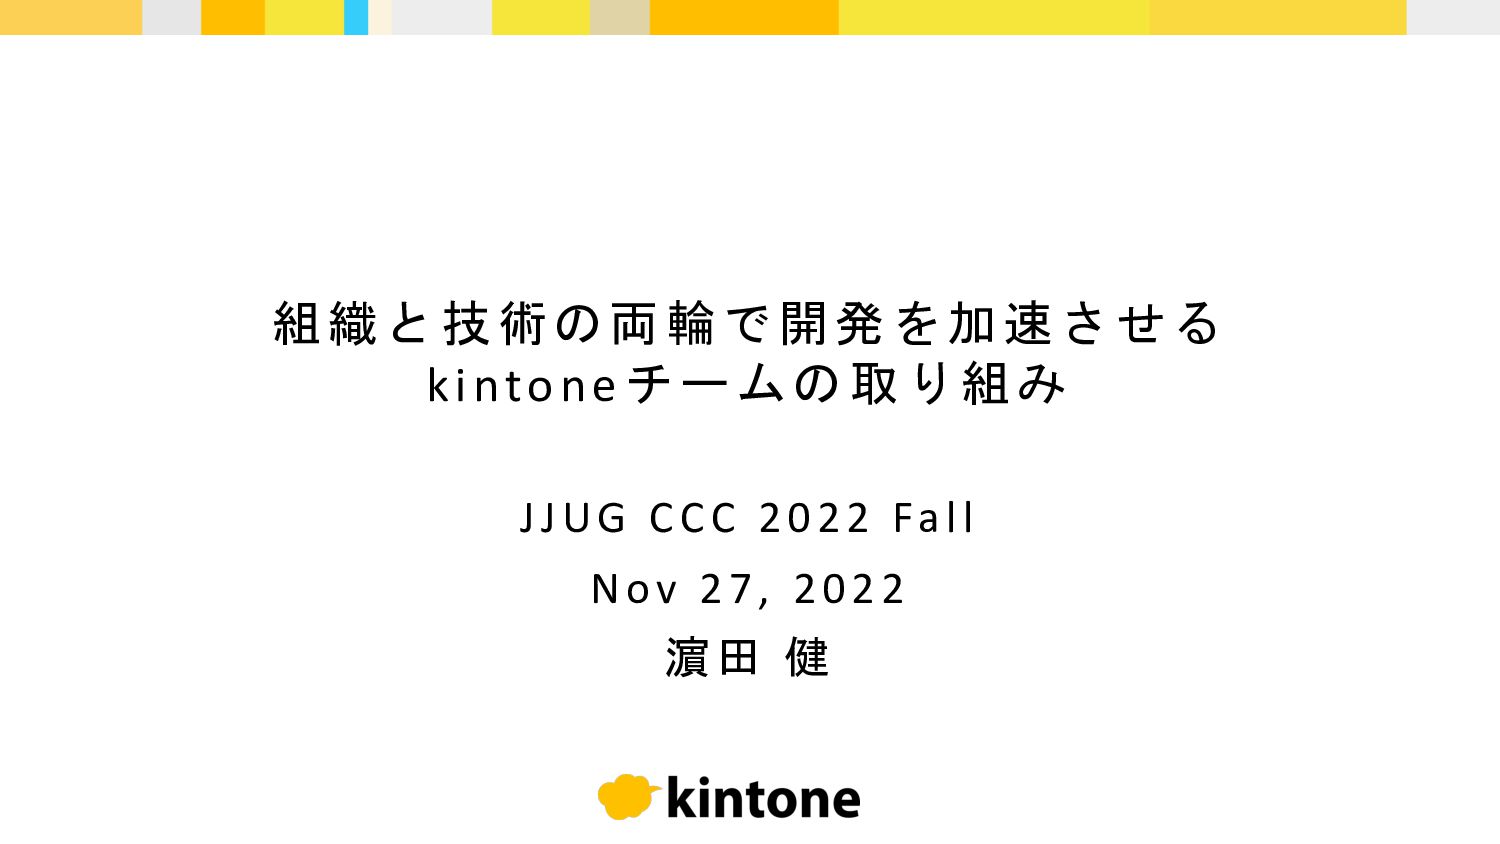 Slide Top: 組織と技術の両輪で開発を加速させるkintoneチームの取り組み / JJUG CCC 2022 Fall Cybozu kintone